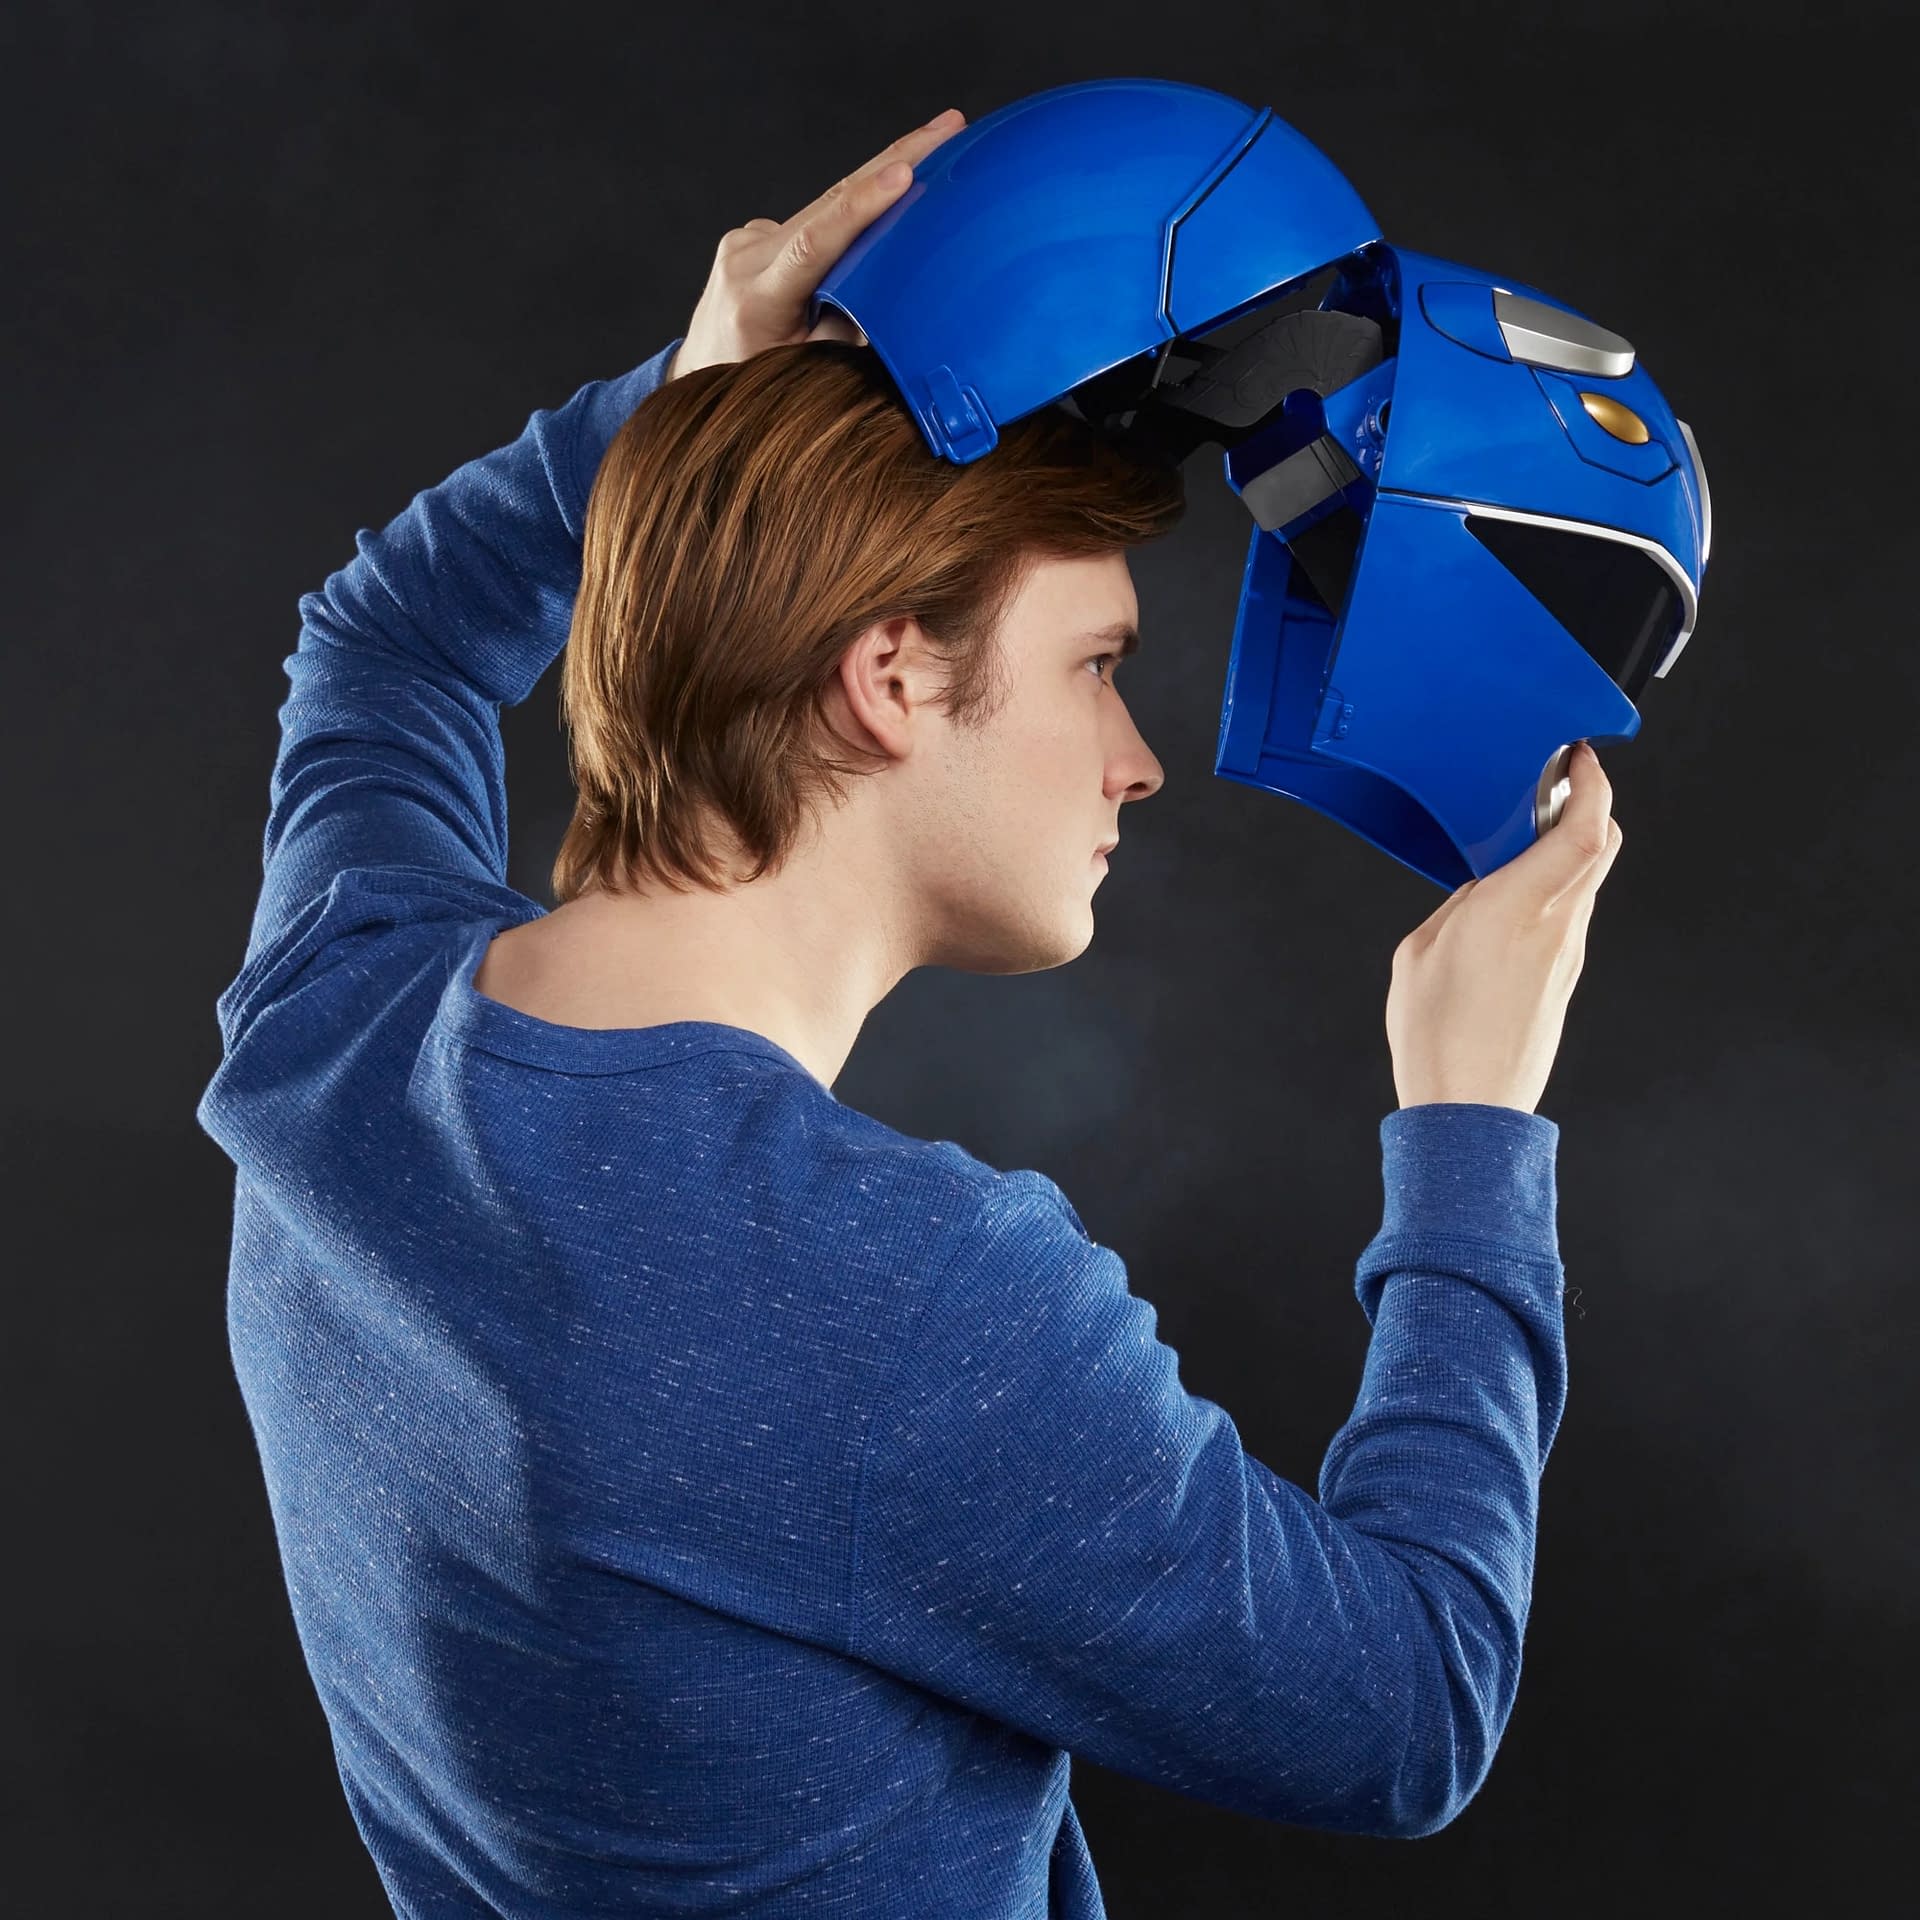 Hasbro Debuts Mighty Morphin Power Rangers Blue Ranger Helmet 